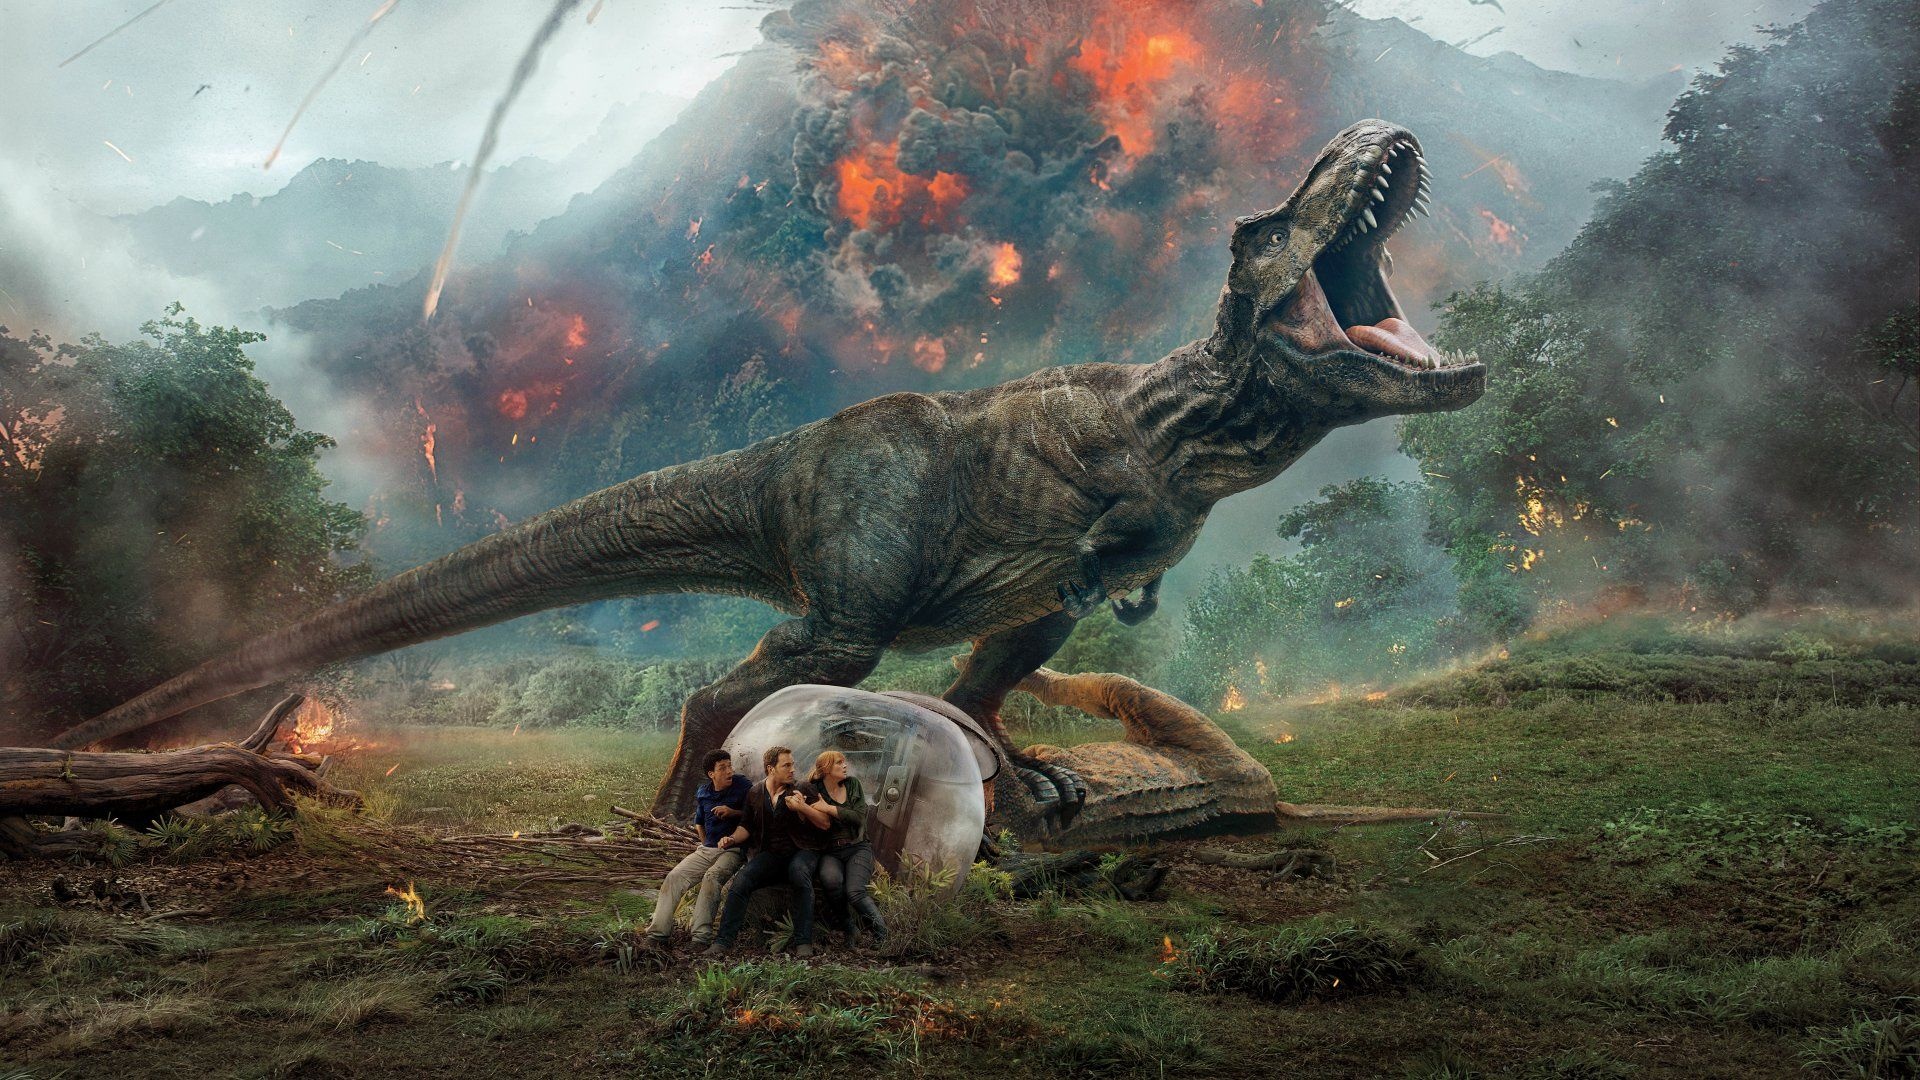 Jurassic World sequel, Epic wallpaper, Fallen Kingdom adventure, Dinosaur spectacle, 1920x1080 Full HD Desktop